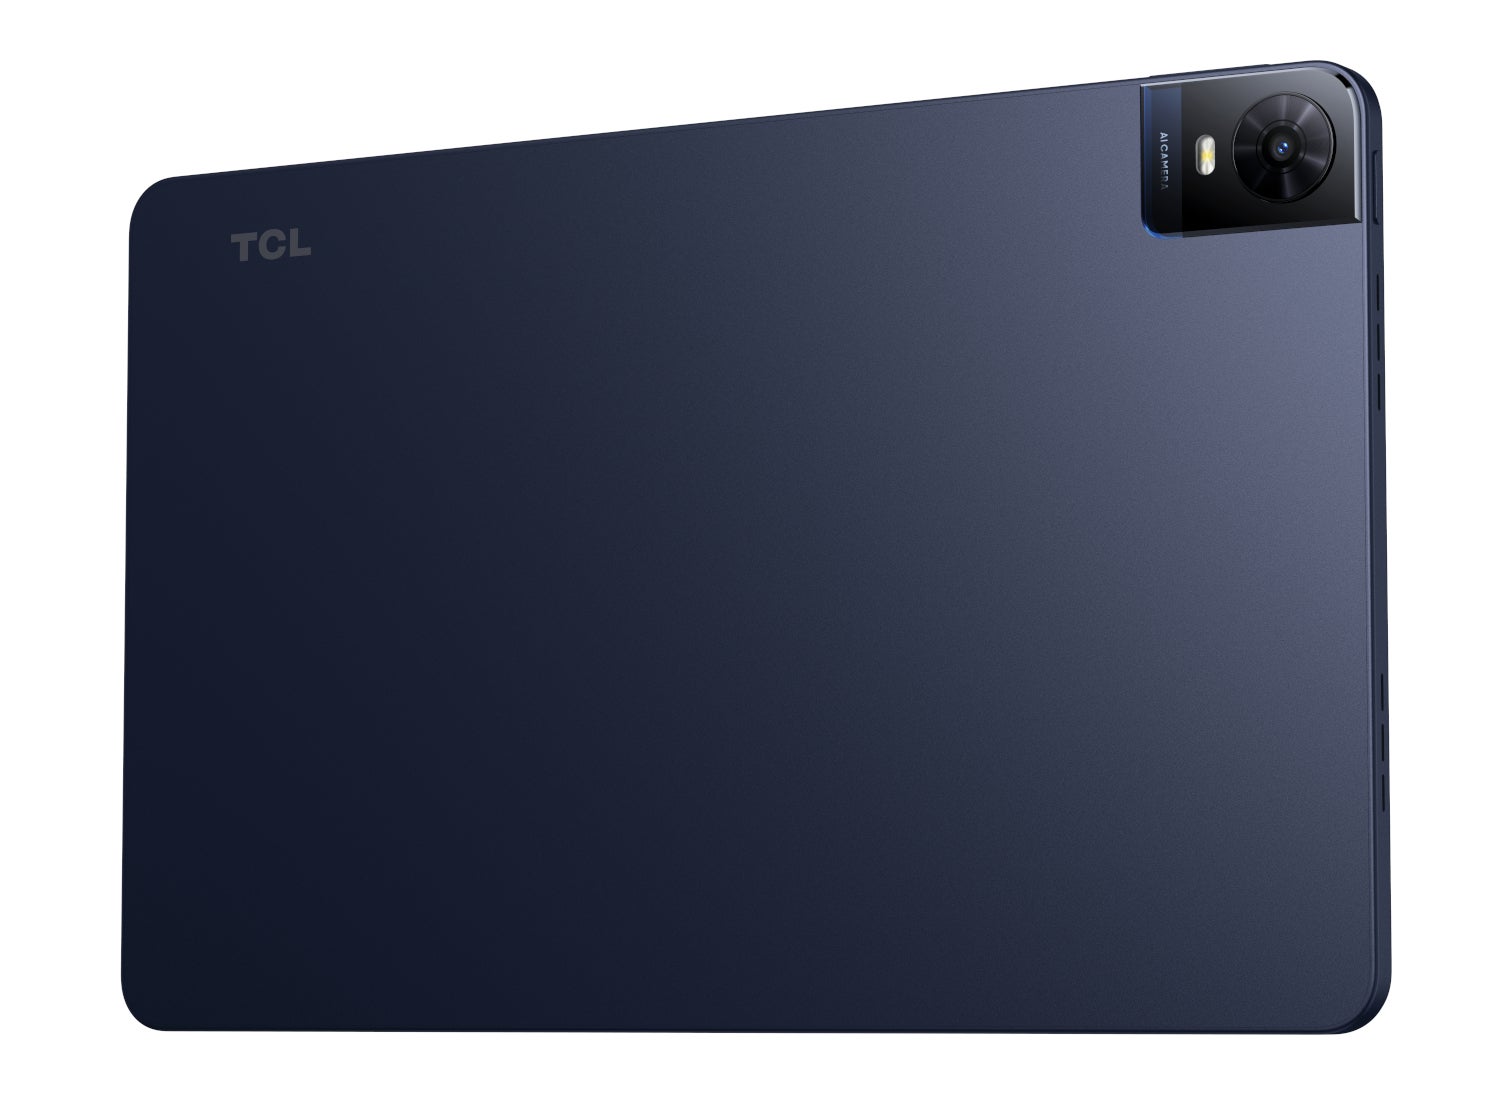 TCL TAB 10 NXTPAPER 5G, Kredi - TCL - Verizon, 10 inç ekranlı, uygun fiyatlı 5G tableti piyasaya sürüyor